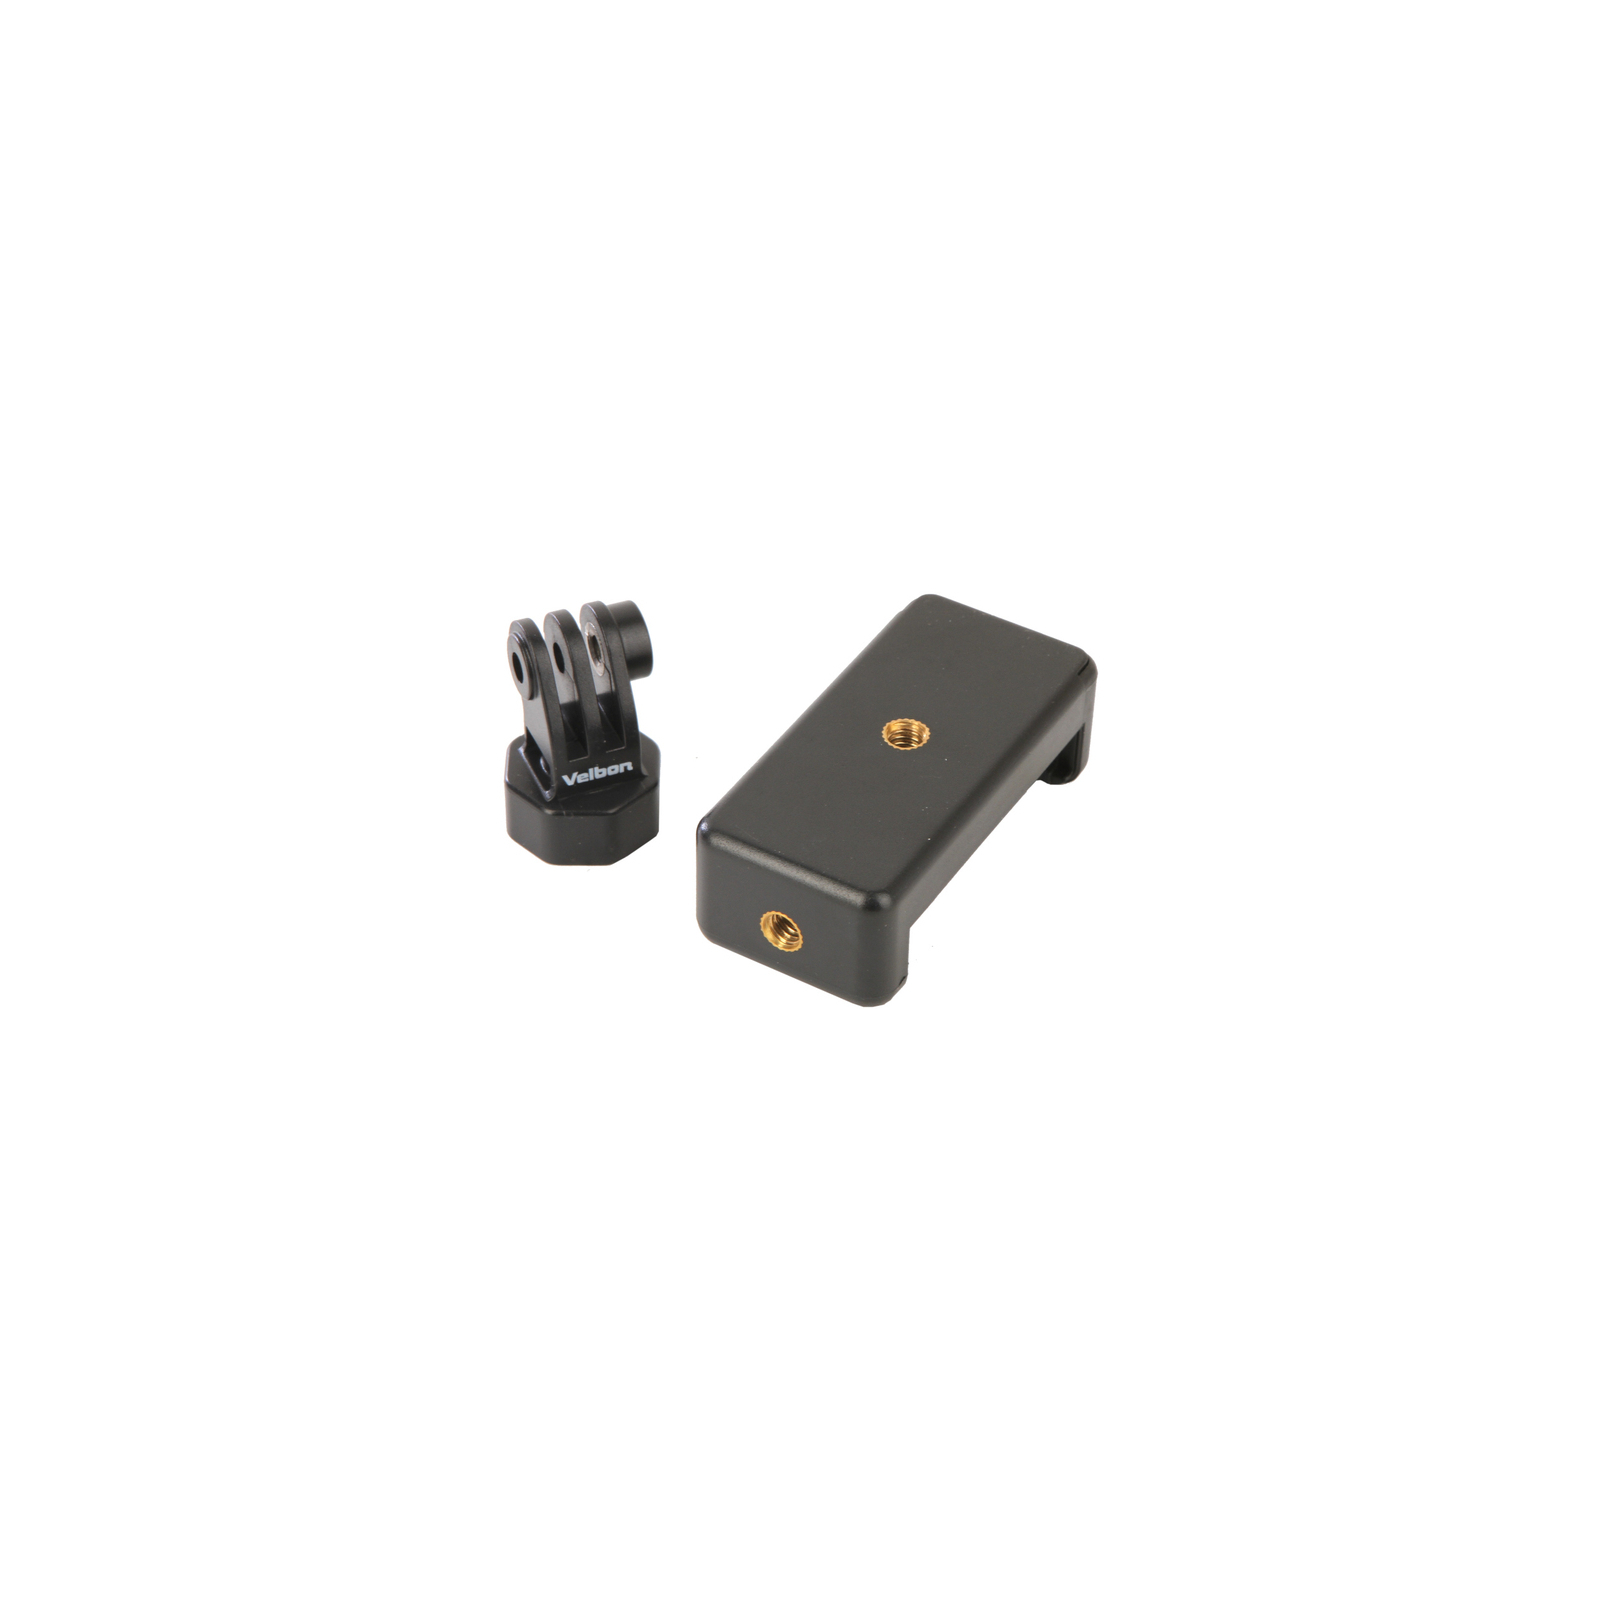 Голова штативная Velbon M-kit (Smart Phone Holder + Action Cam Adapter) (M-kit)